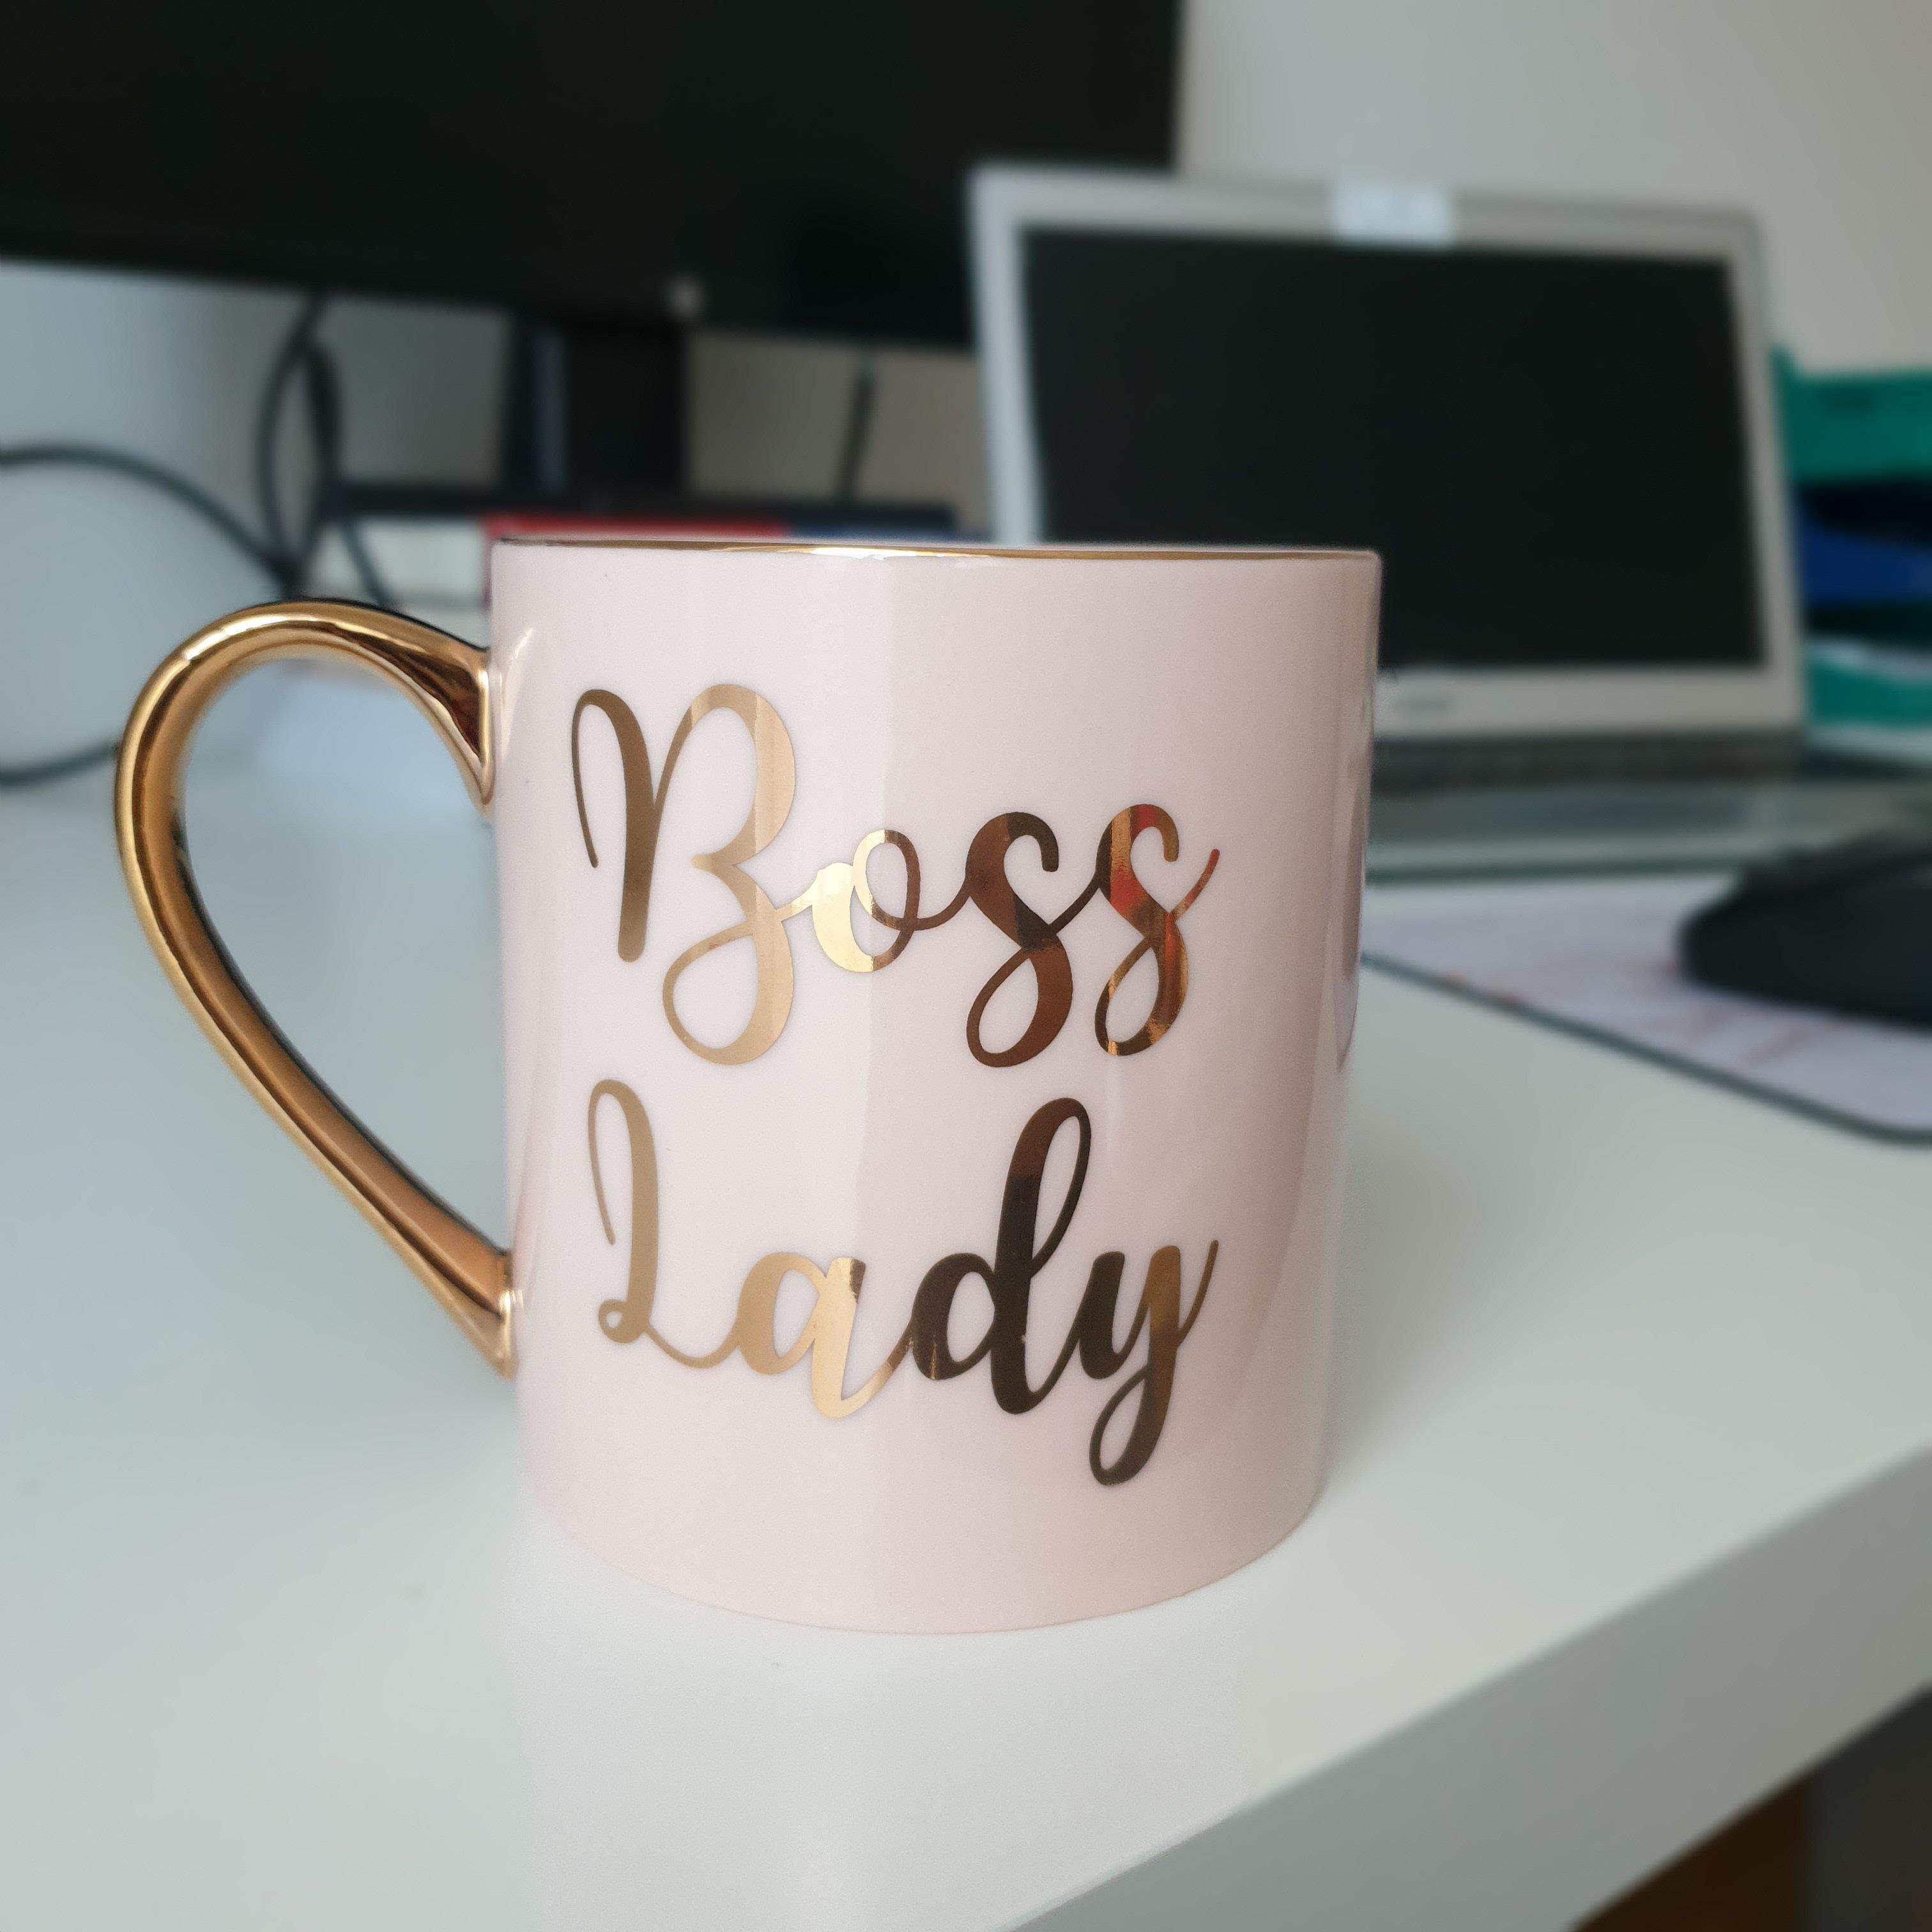 Boss Lady - Tasse Schwarz Gold - Tasse Rosa Gold